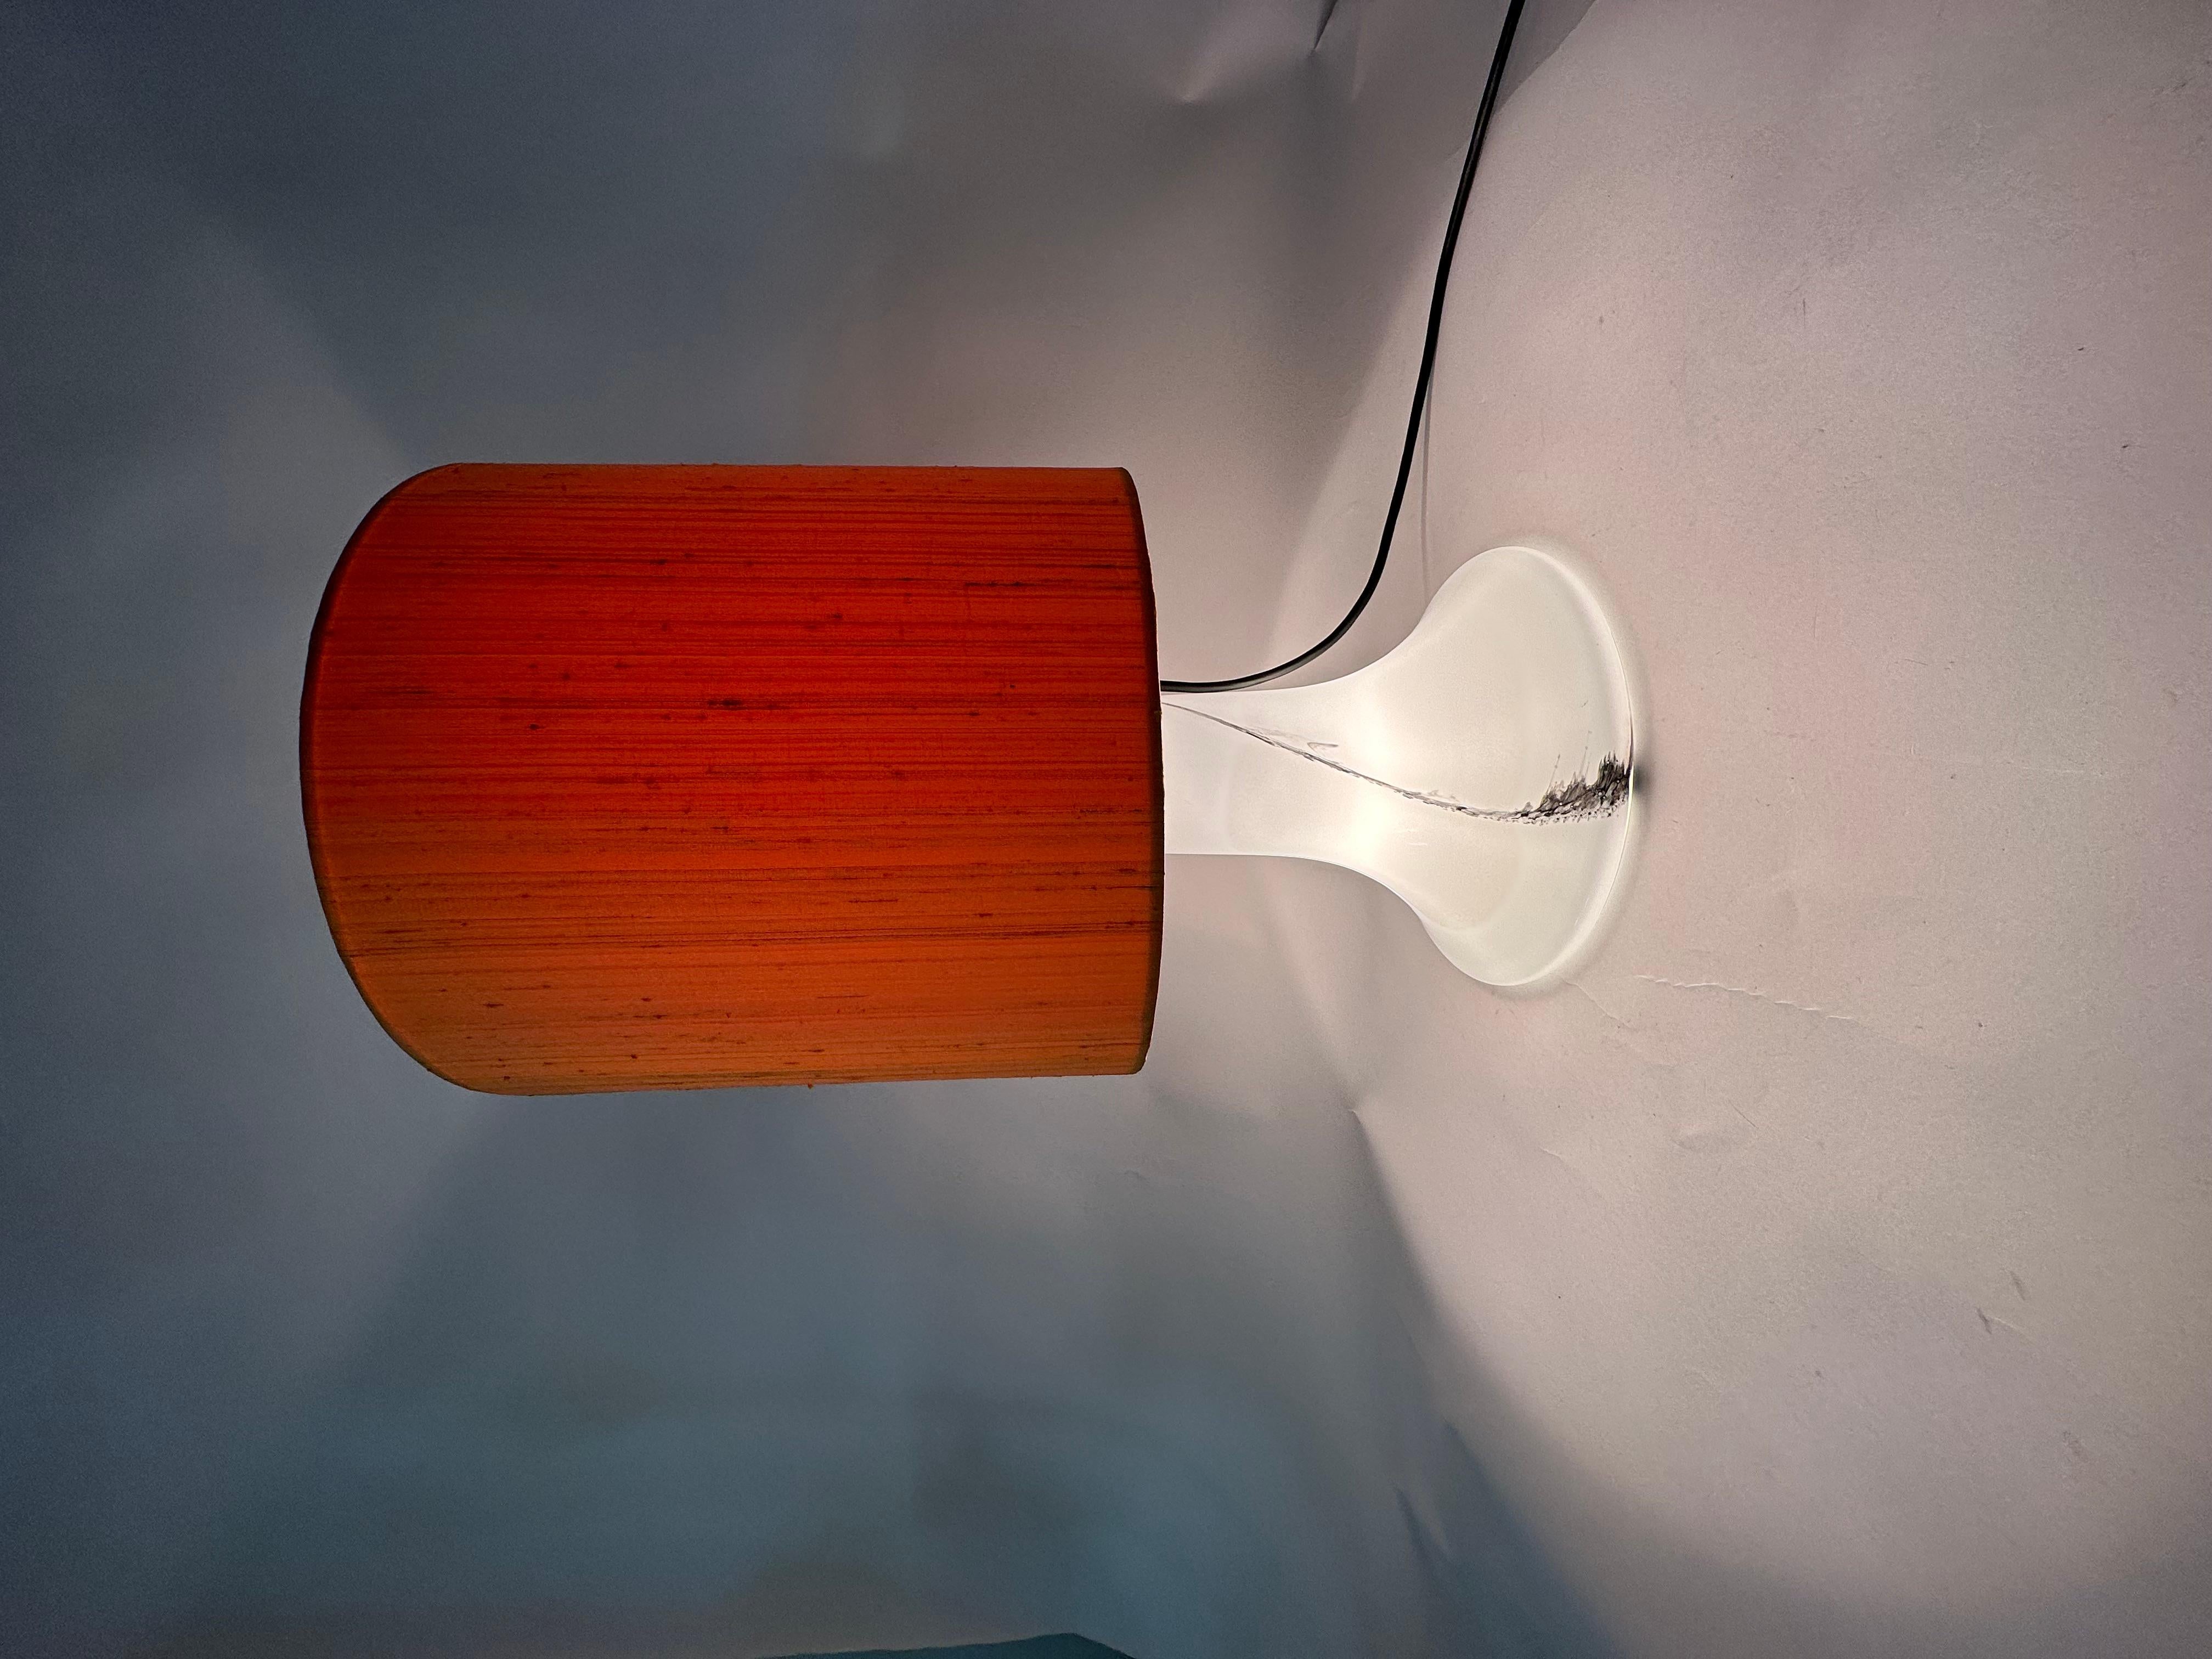 Peil & Putzer glass table lamp , 1970's

Dimensions: 53cm H, 33cm Diameter
Material: Glass, fabric
Manufacturer: Peil & Putzler
Color: White , orange , black